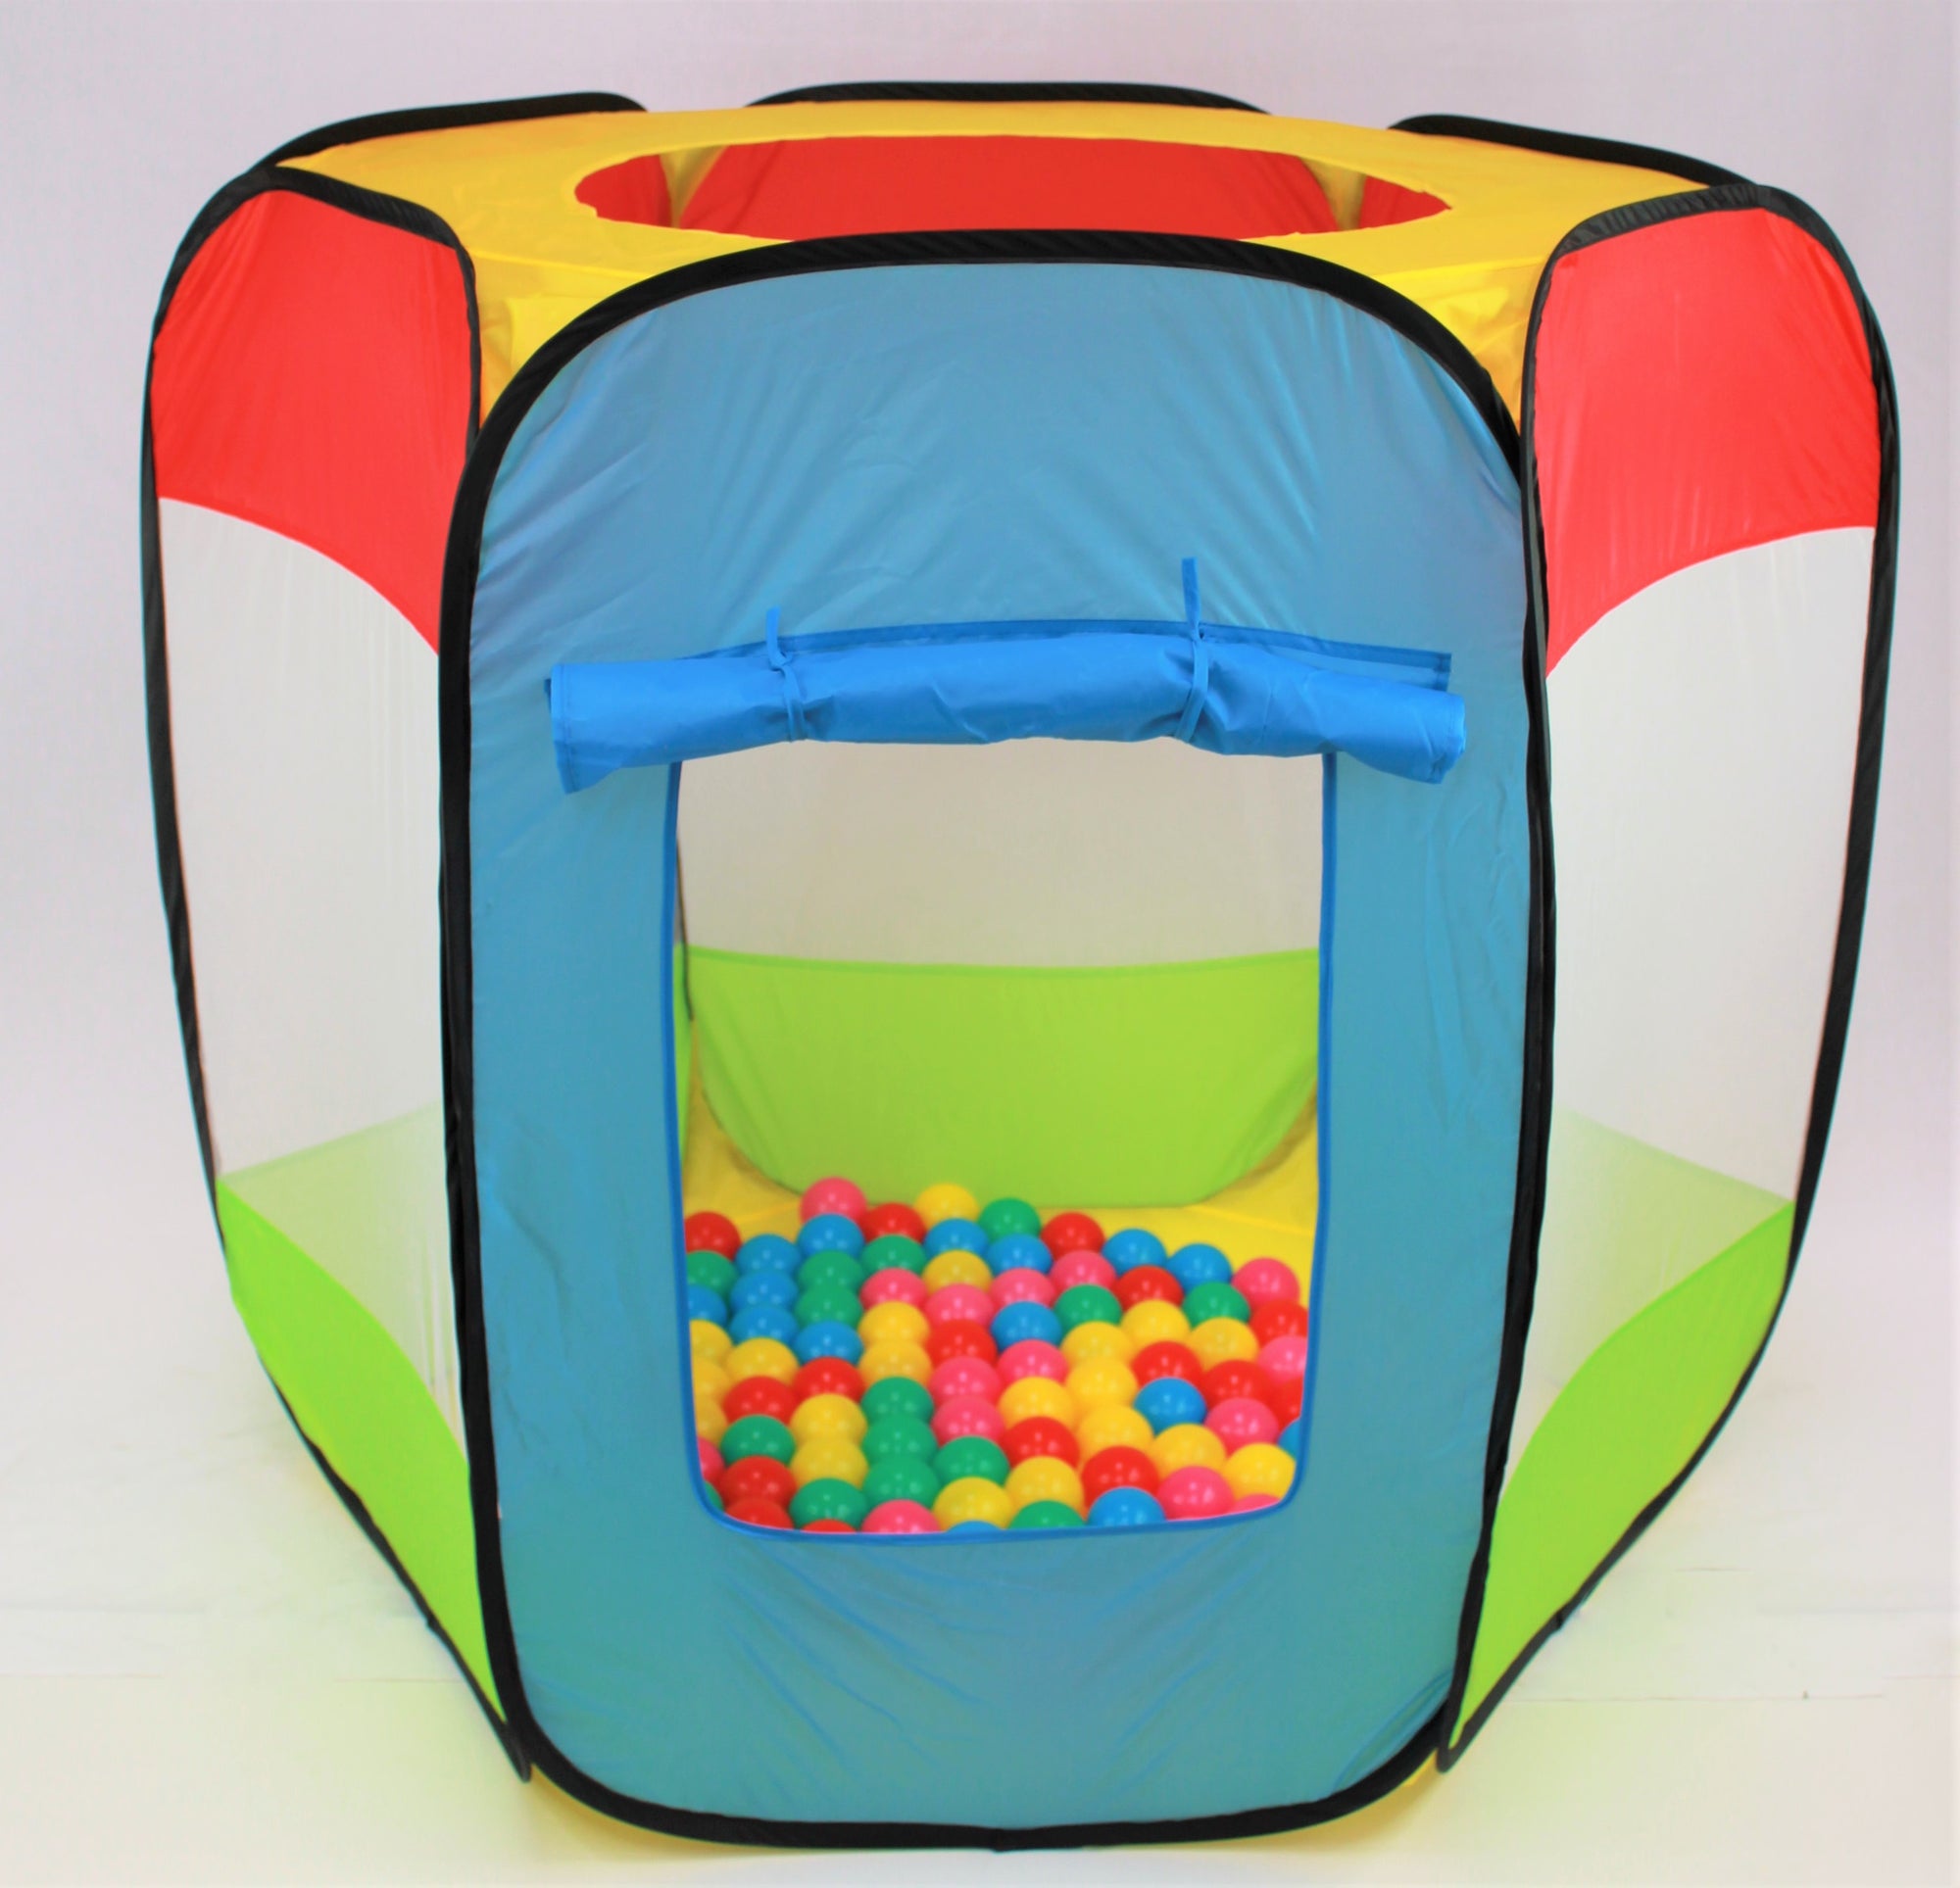 iPlay Hexagon Tent With 100 Playballs